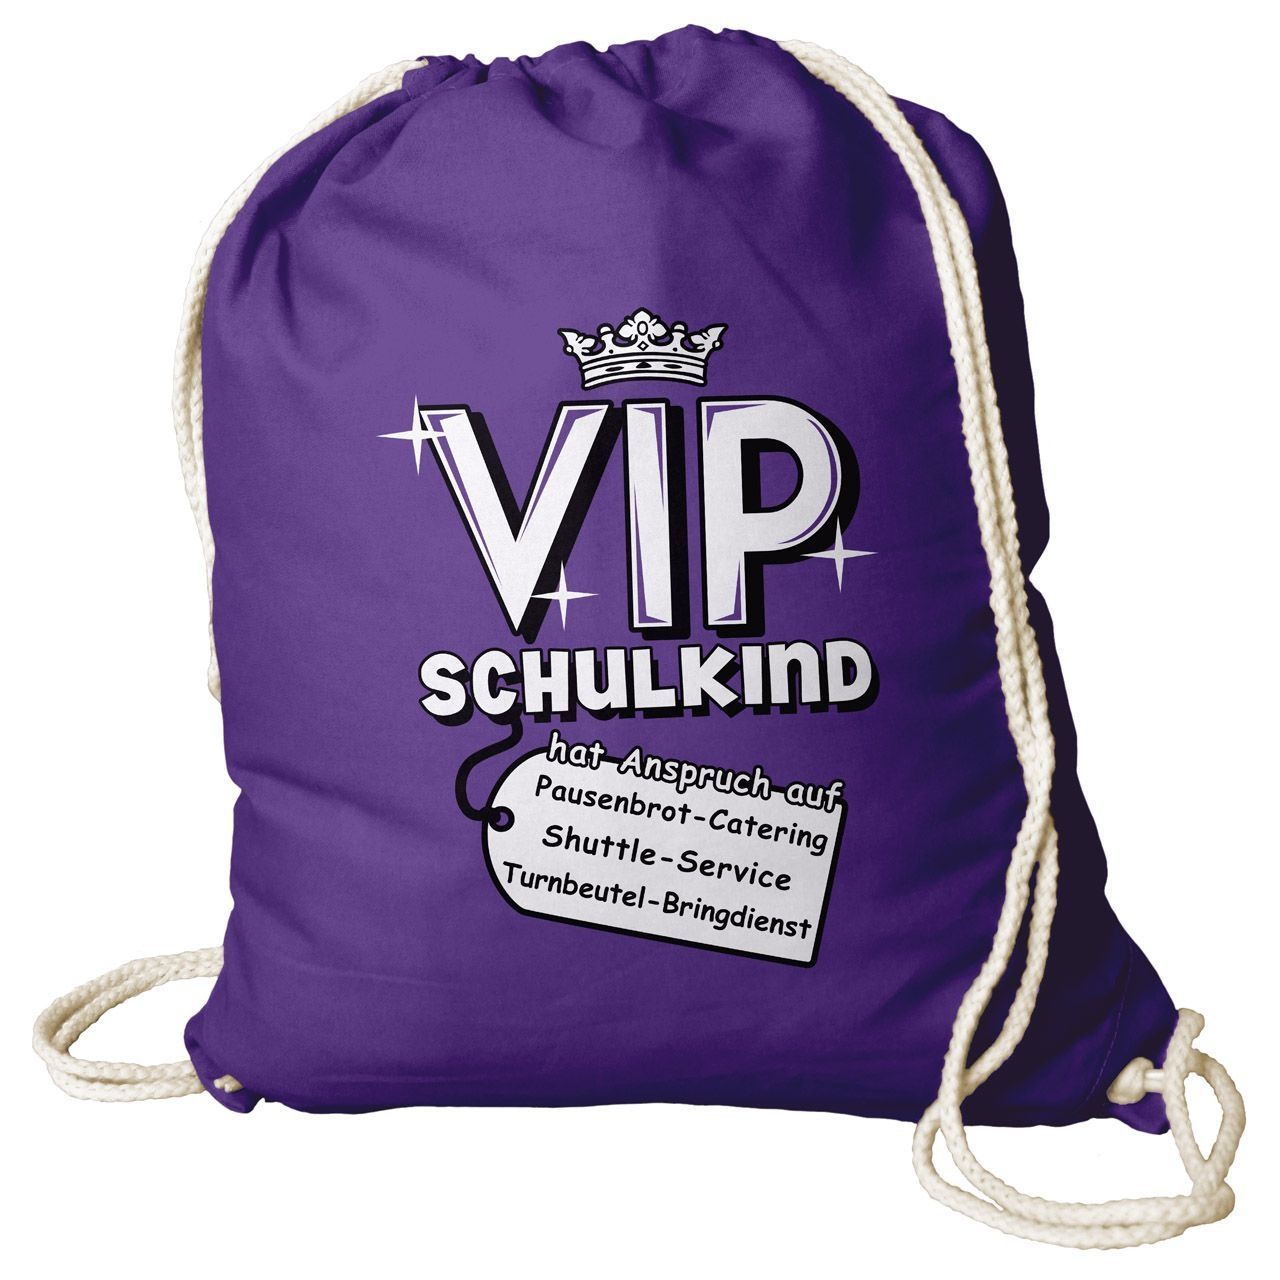 VIP Schulkind Rucksack Beutel lila